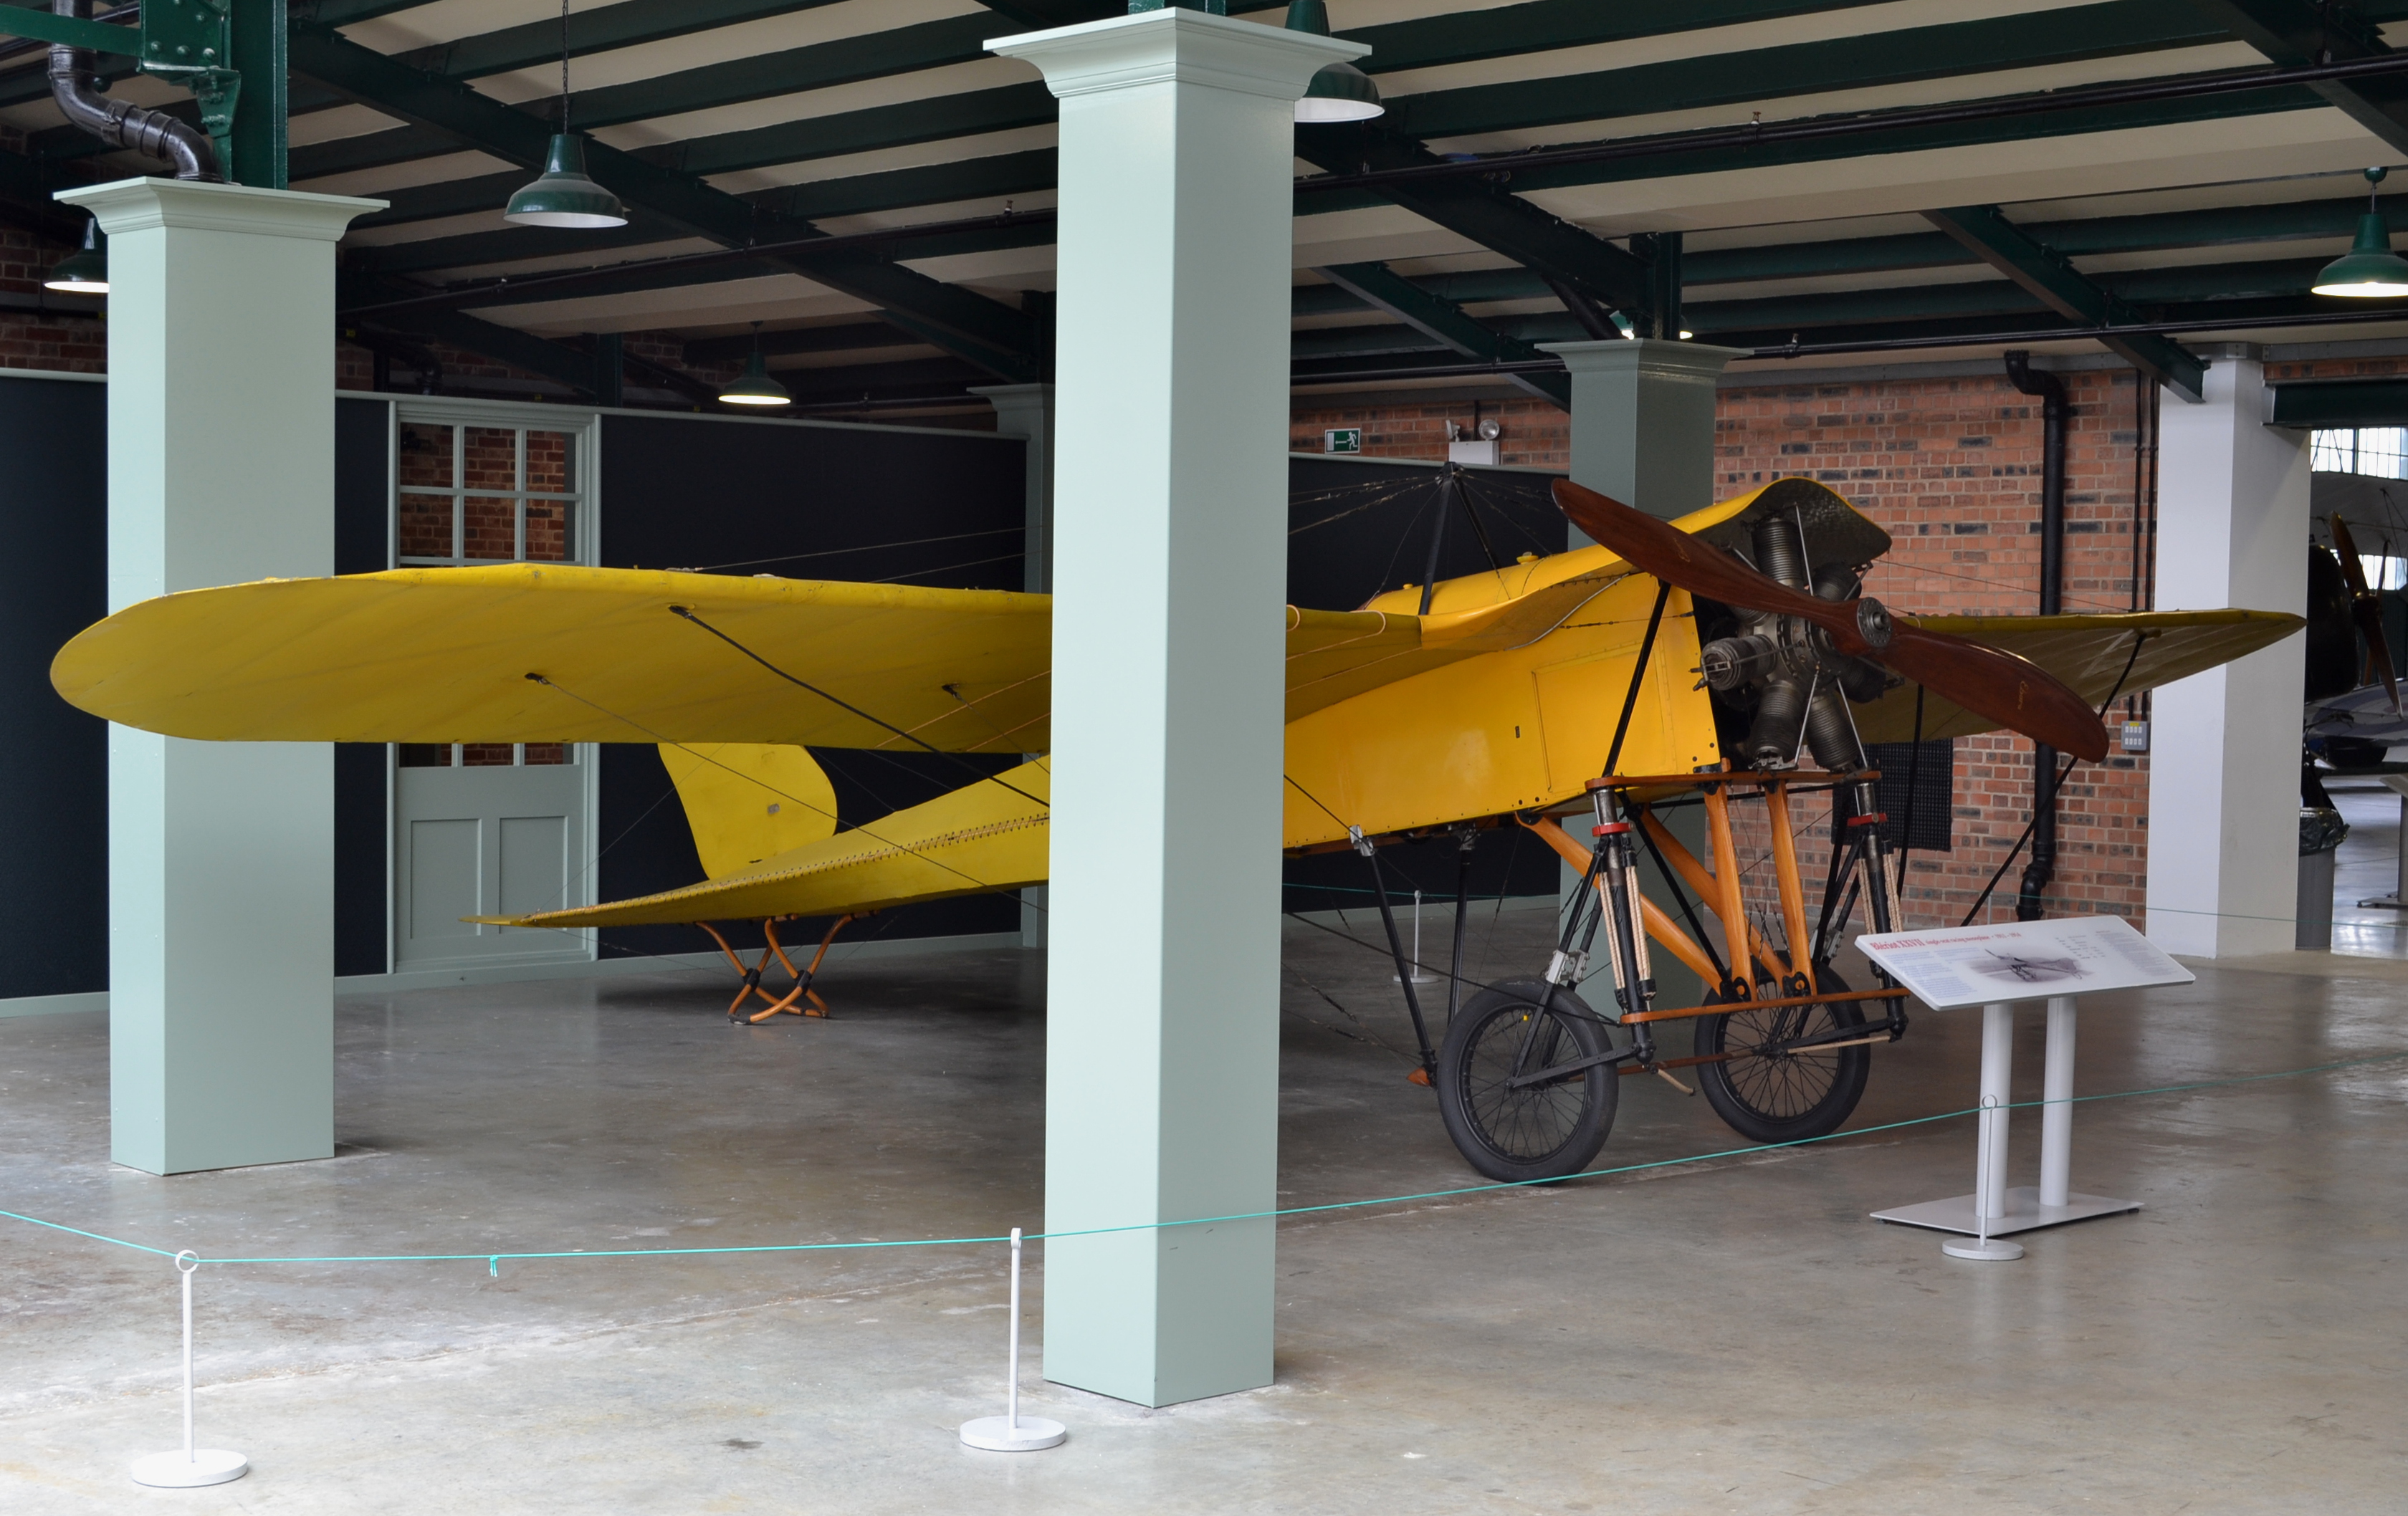 Blériot XXVII at the RAF Museum